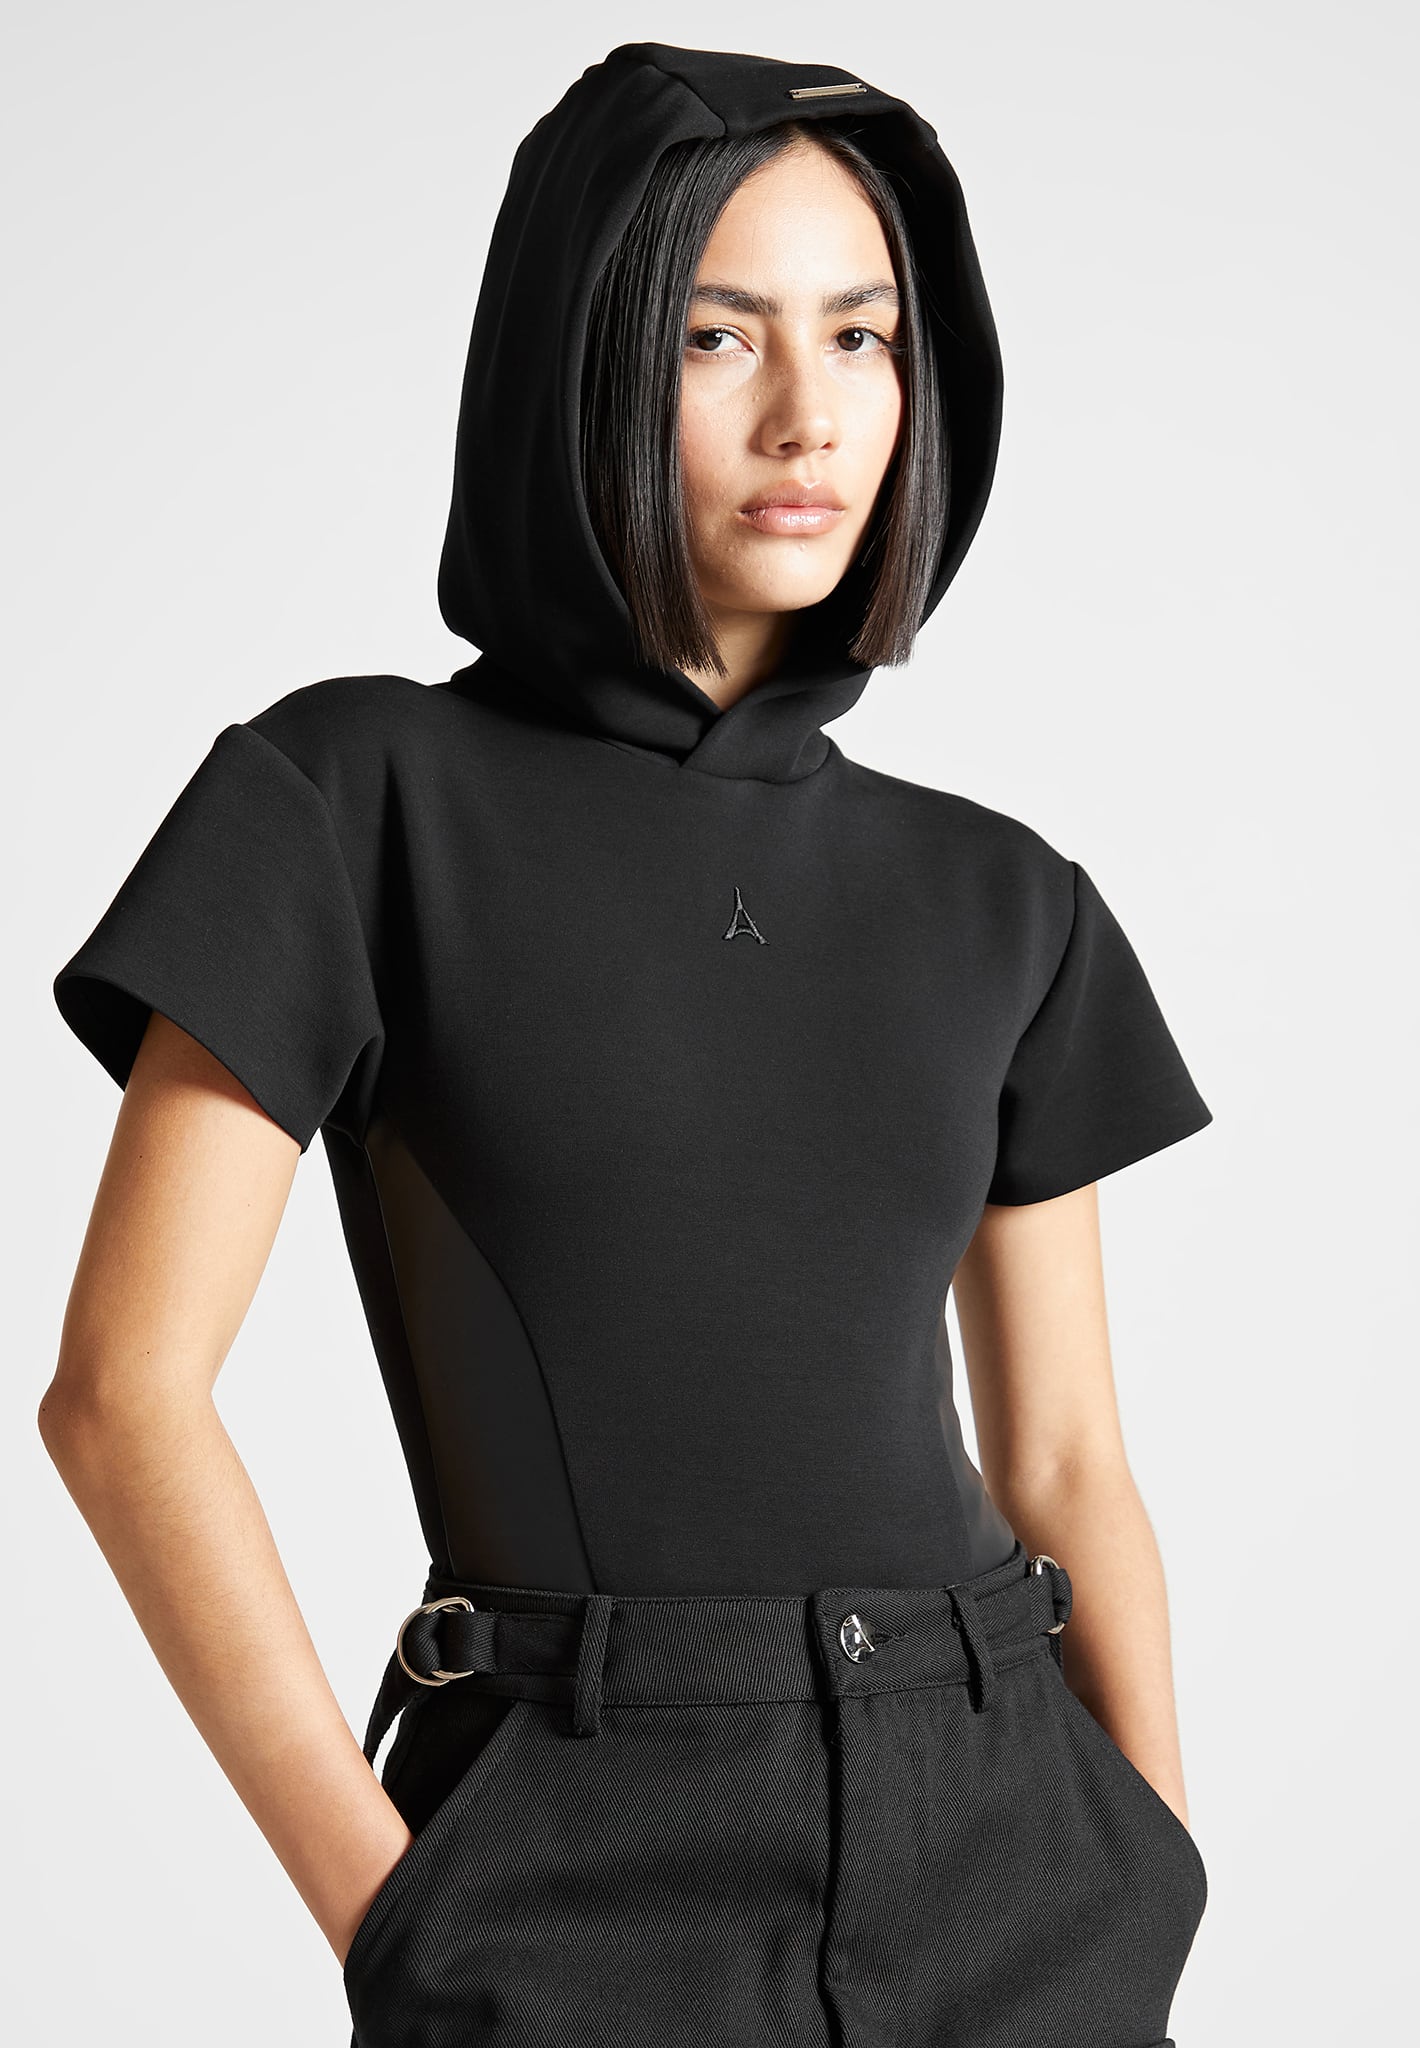 short-sleeve-bodysuit-with-hood-black